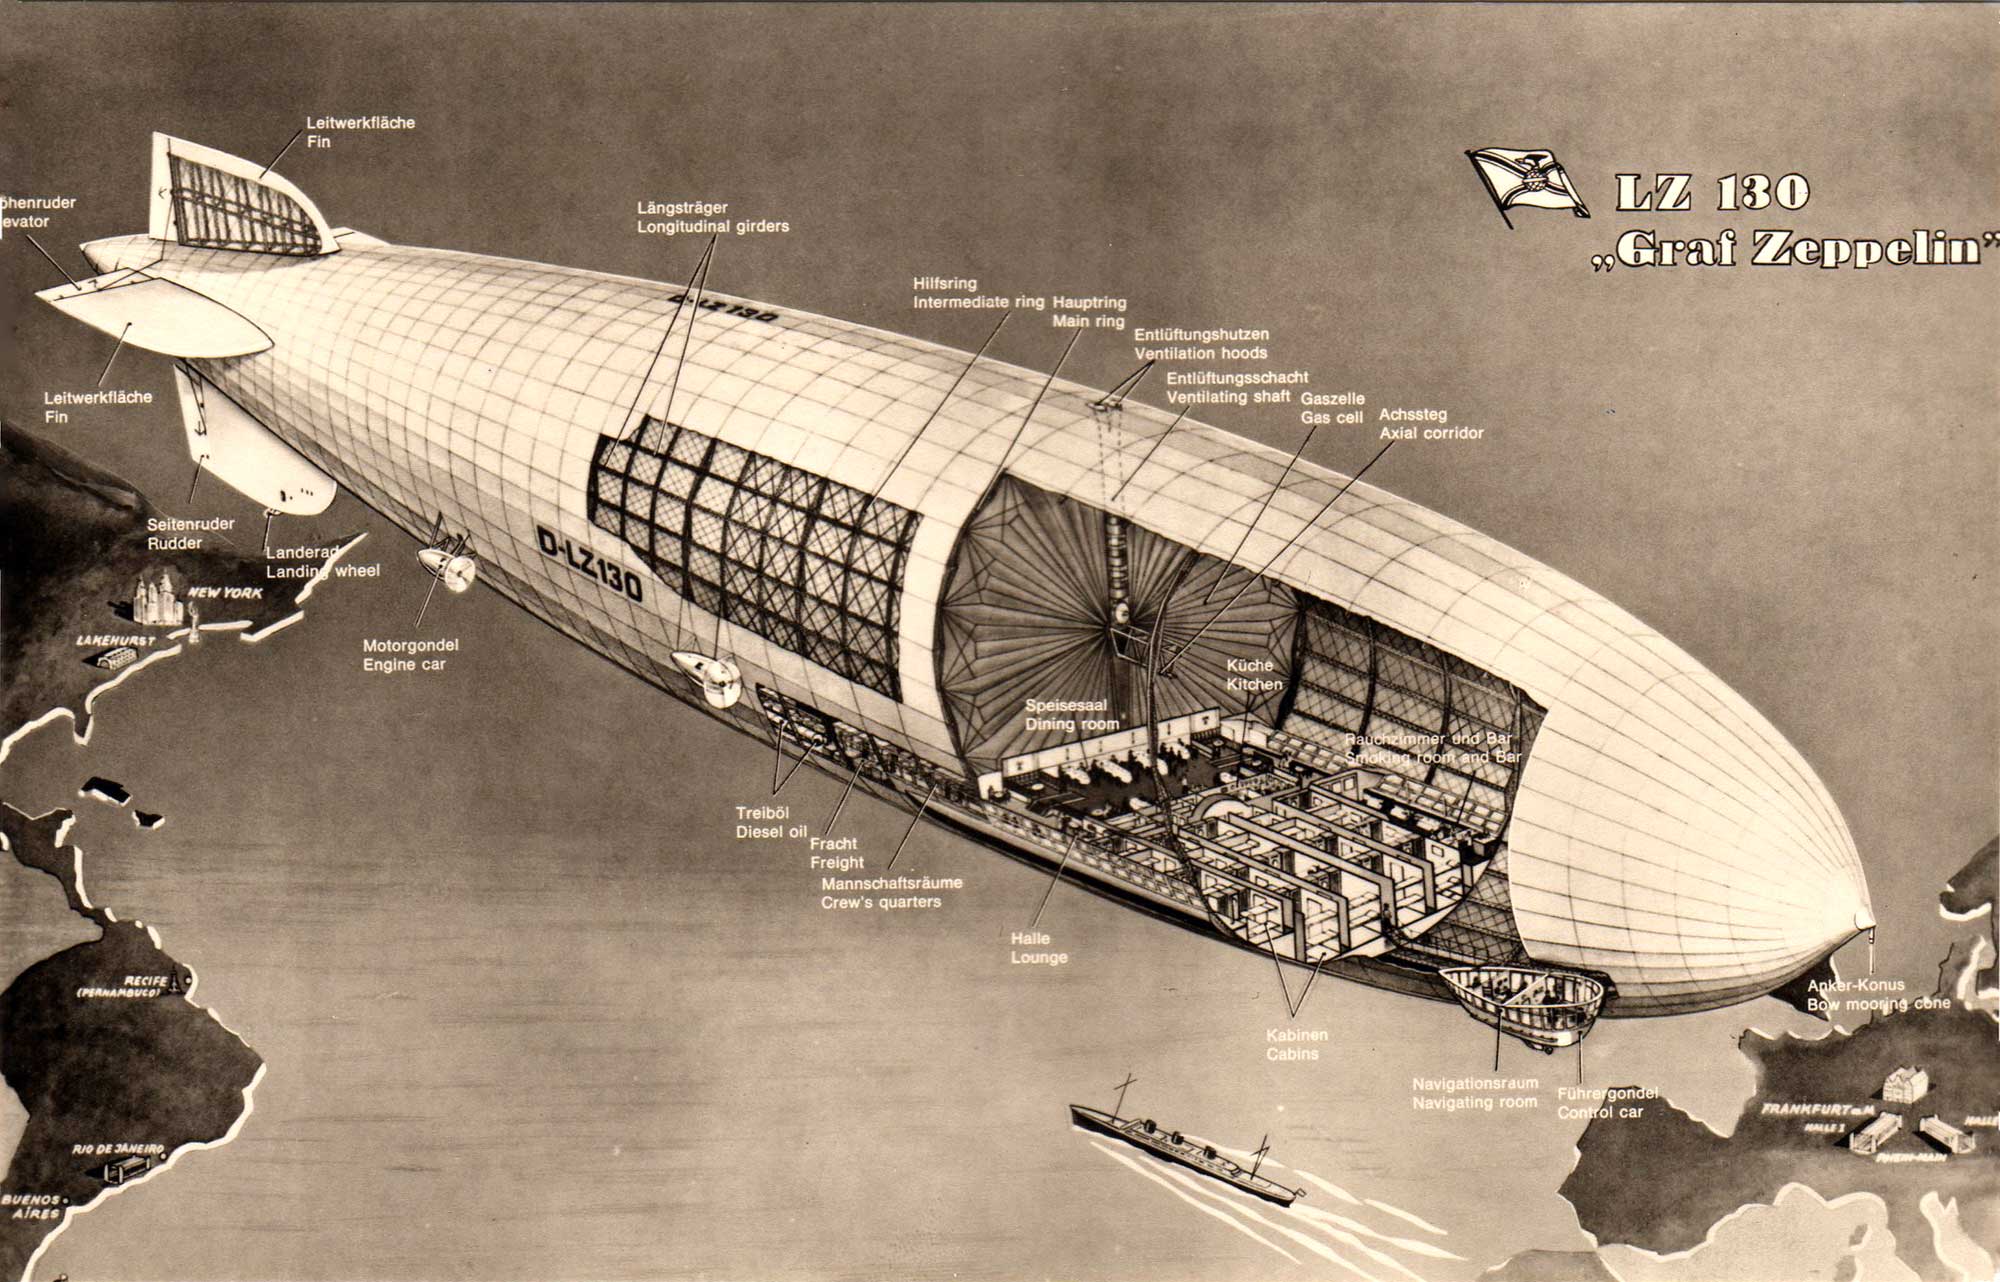 LZ-130 Graf Zeppelin | Airships.net